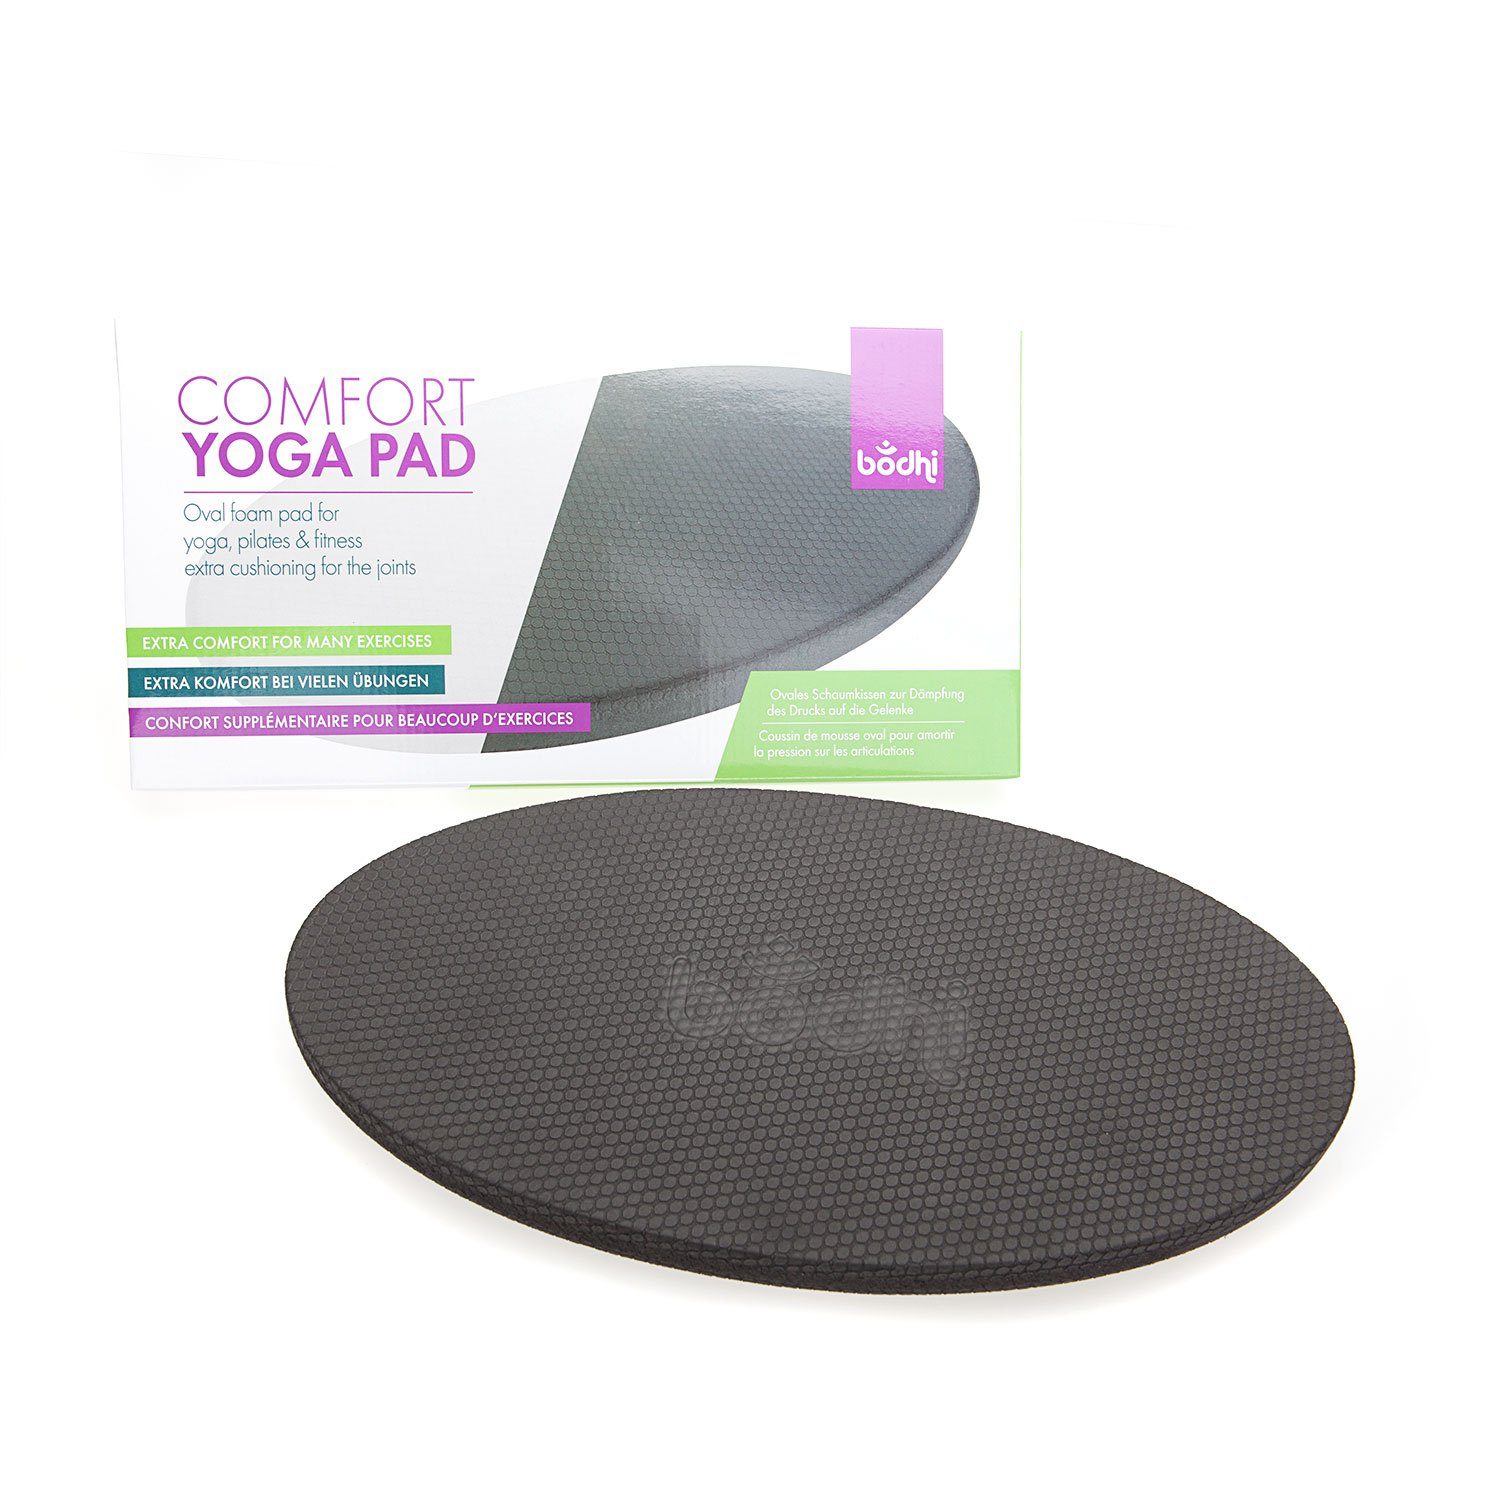 anthrazit Yoga Comfort bodhi Pad Pad, Balance